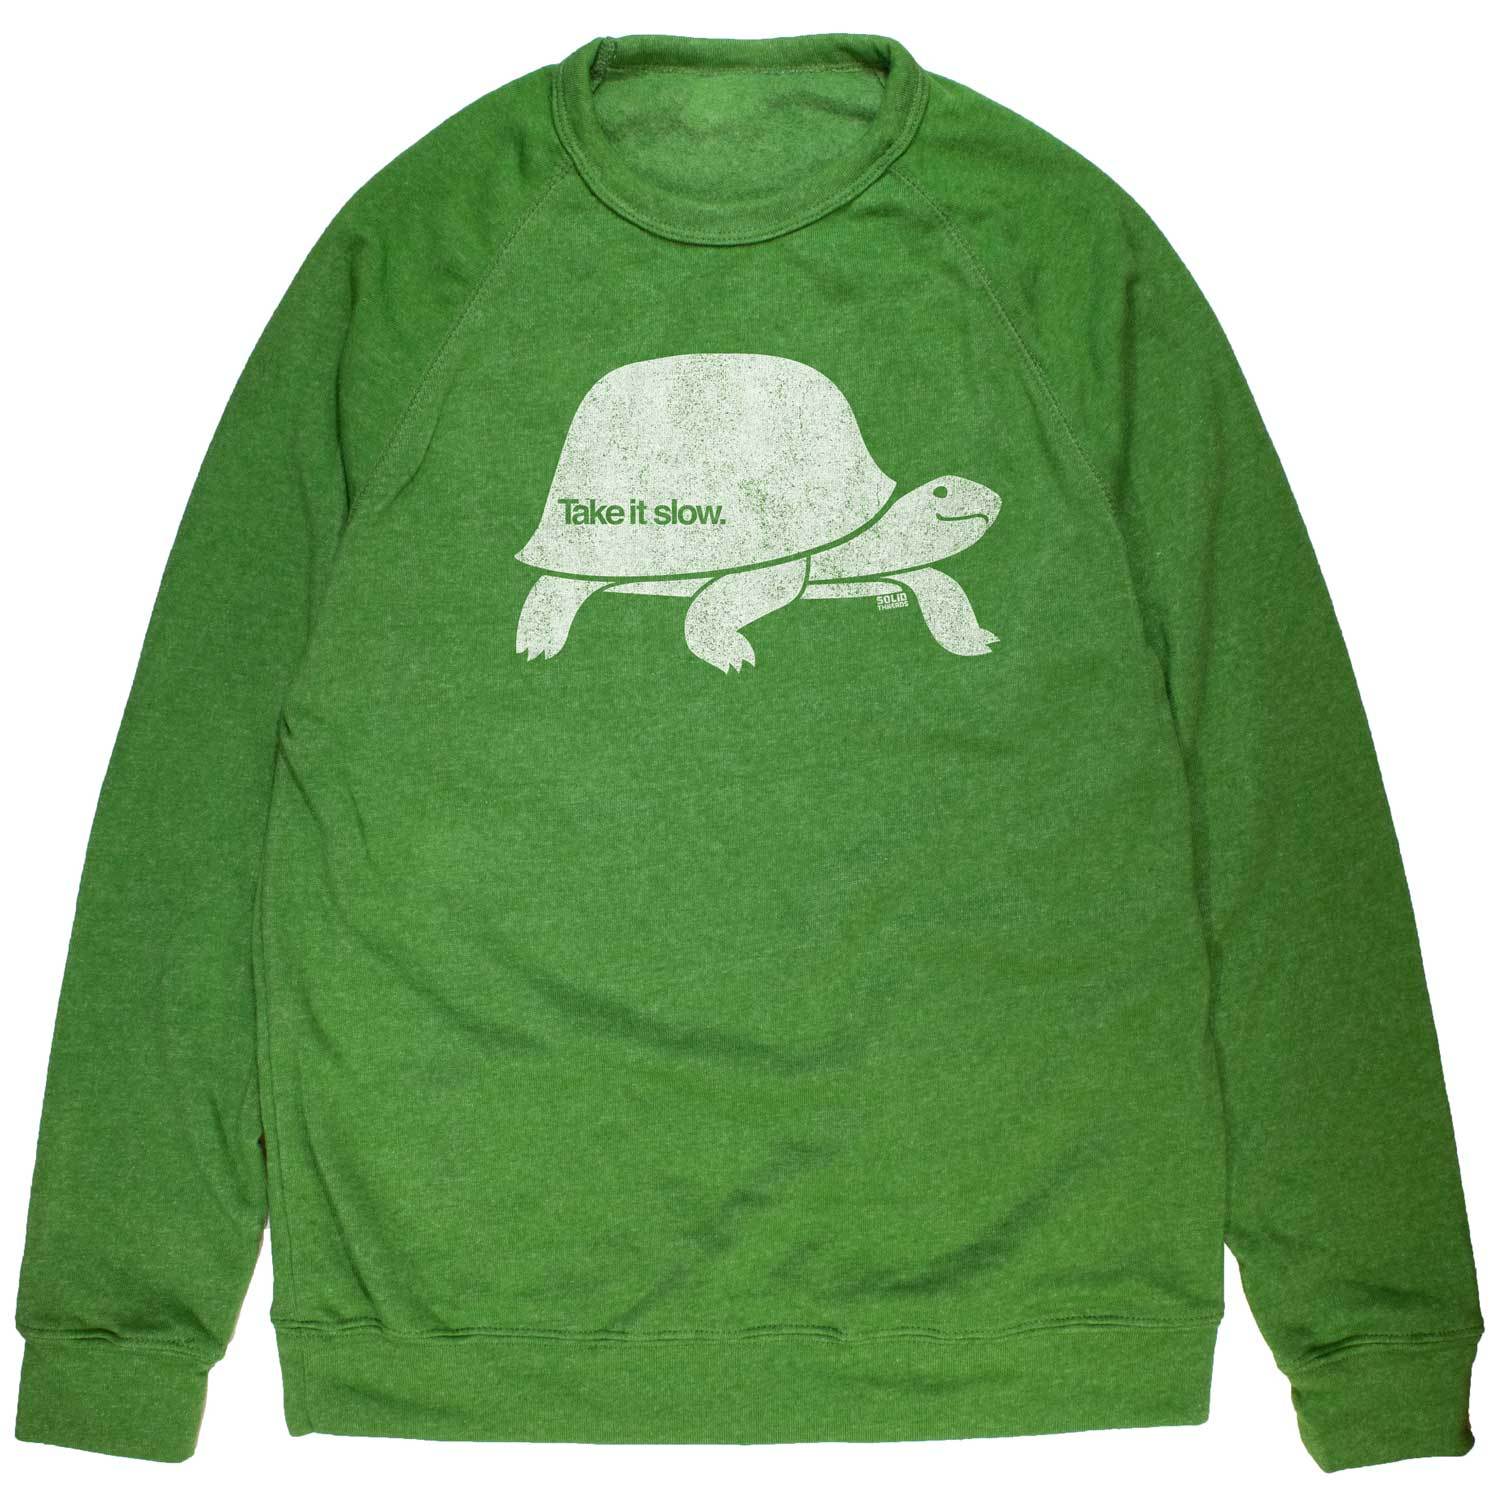 Old School Vintage Green Fleece Crewneck Sweatshirt